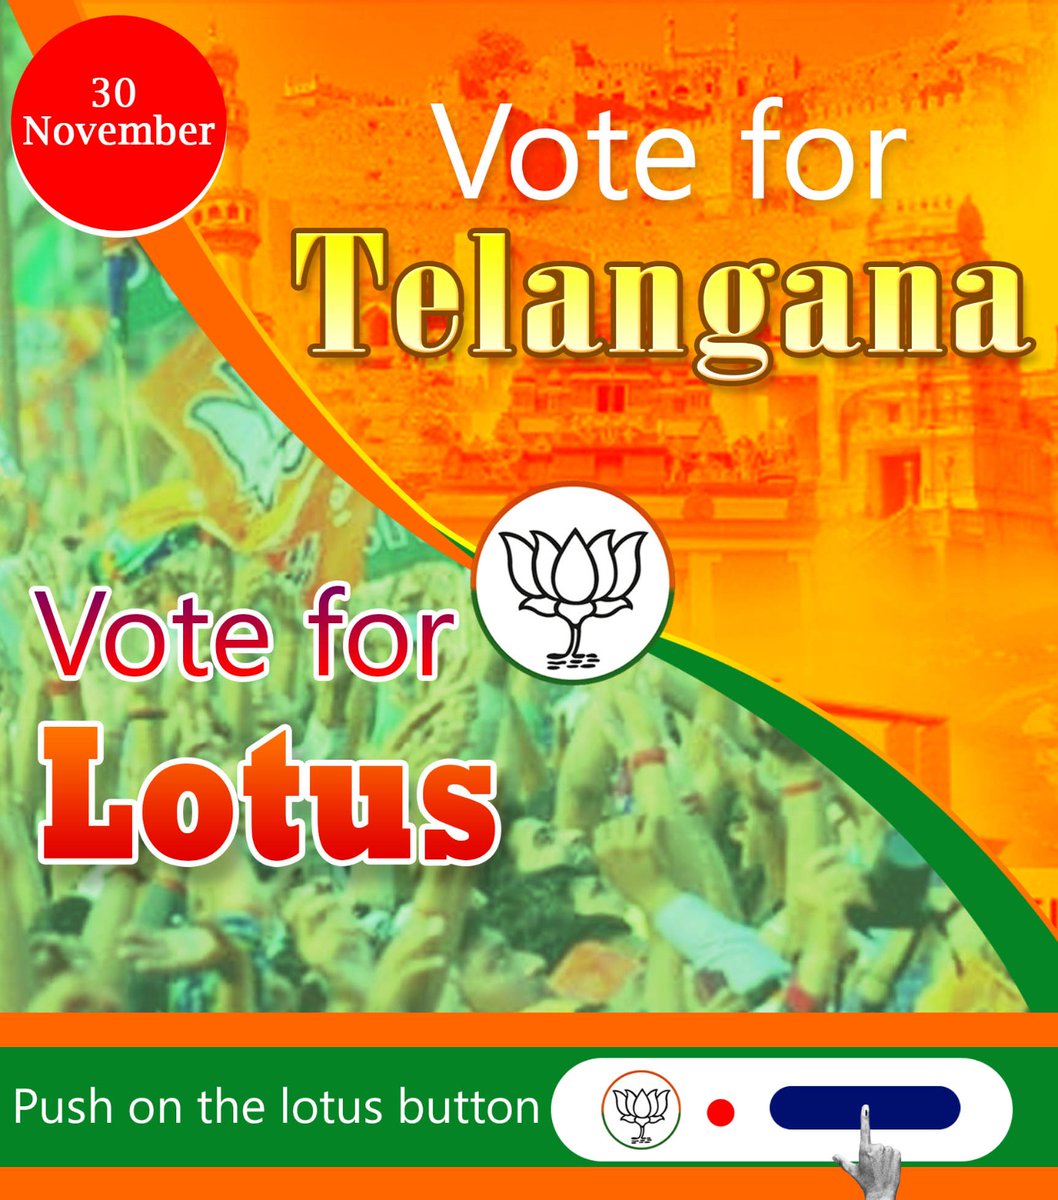 VOTE FOR NATION
VOTE FOR DEVELOPMENT
VOTE ON LOTUS 🪷🪷
#TelanganaWithBJP
@TigerRajaSingh